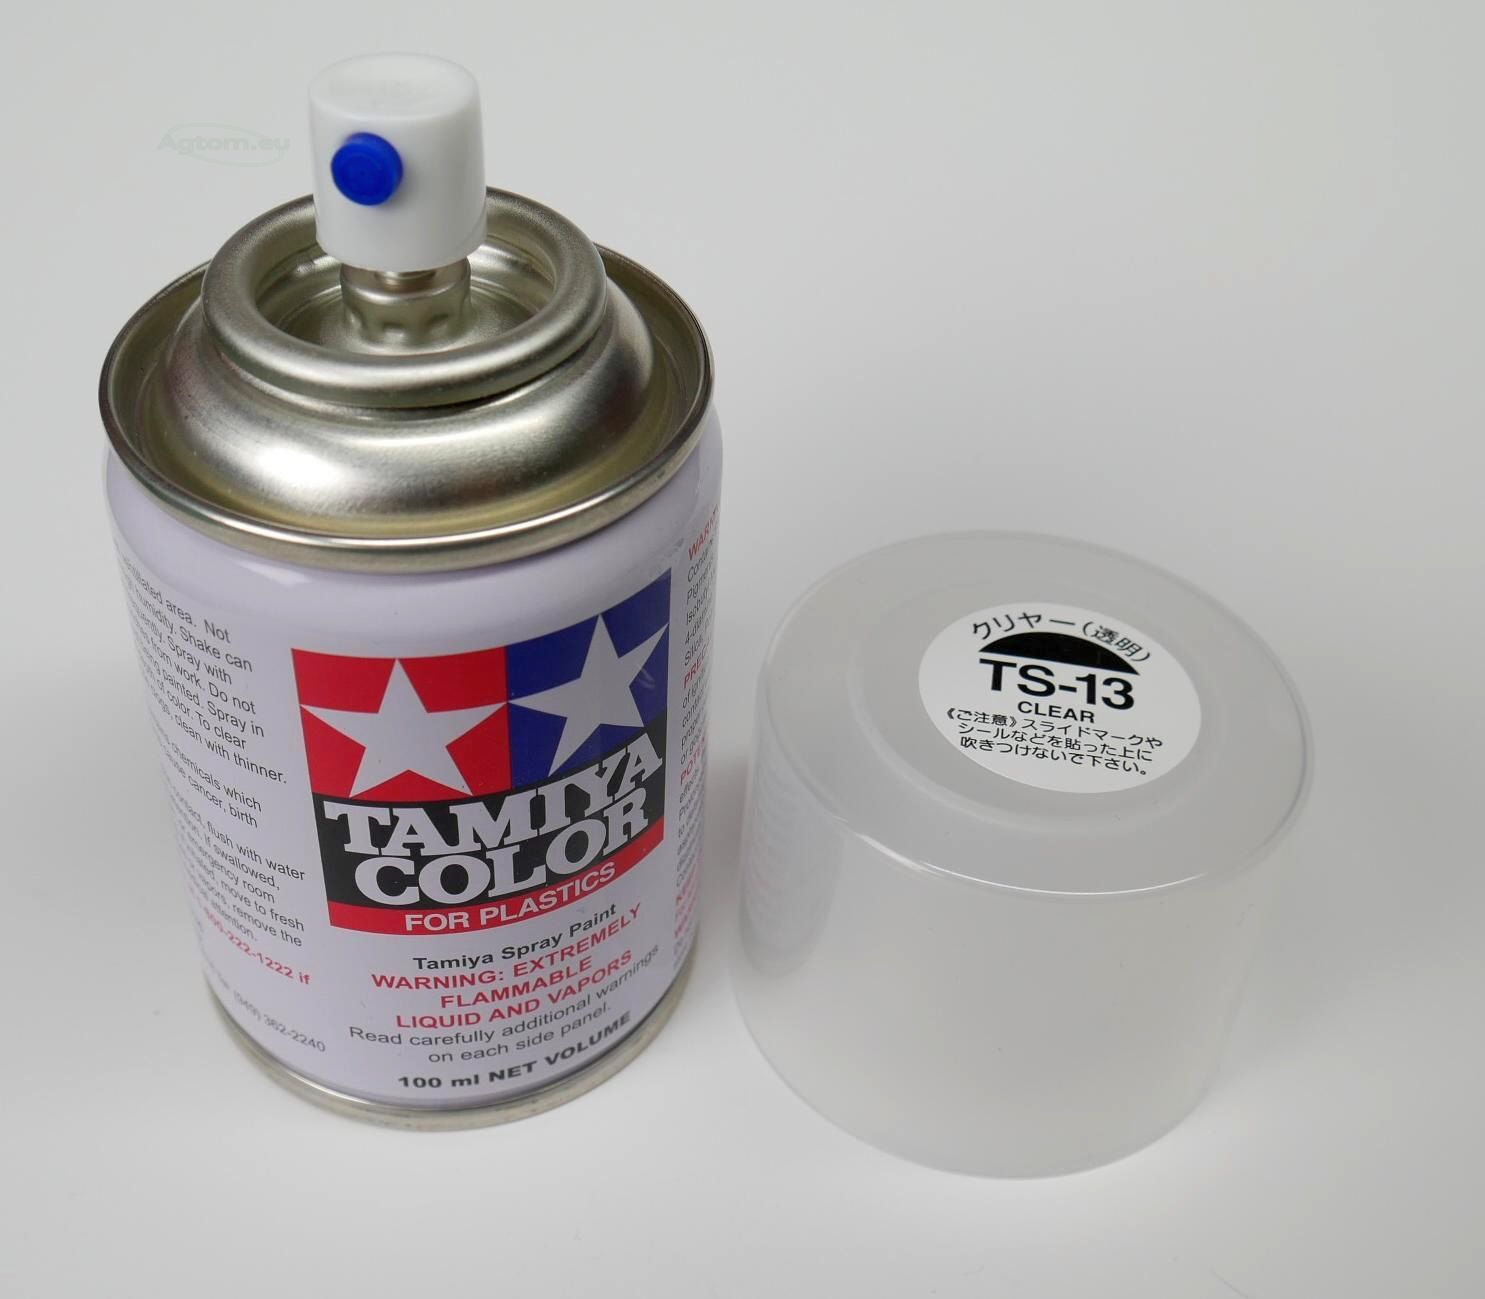 Tamiya TS-79 Semi Gloss Clear Spray Lacquer